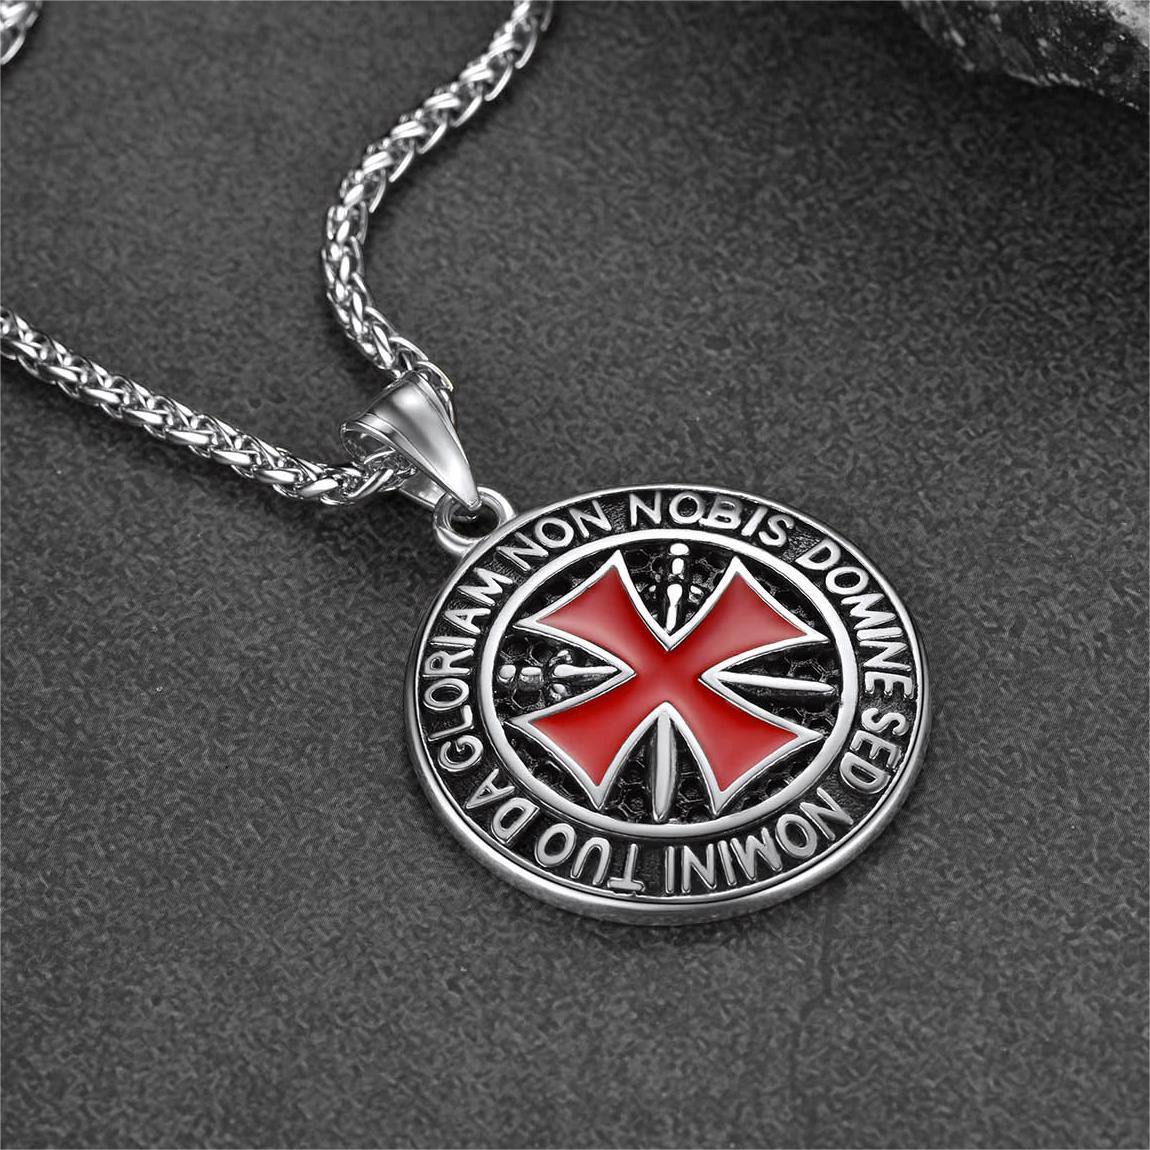 FaithHeart Knights Templar Cross Medallion Necklace For Men FaithHeart